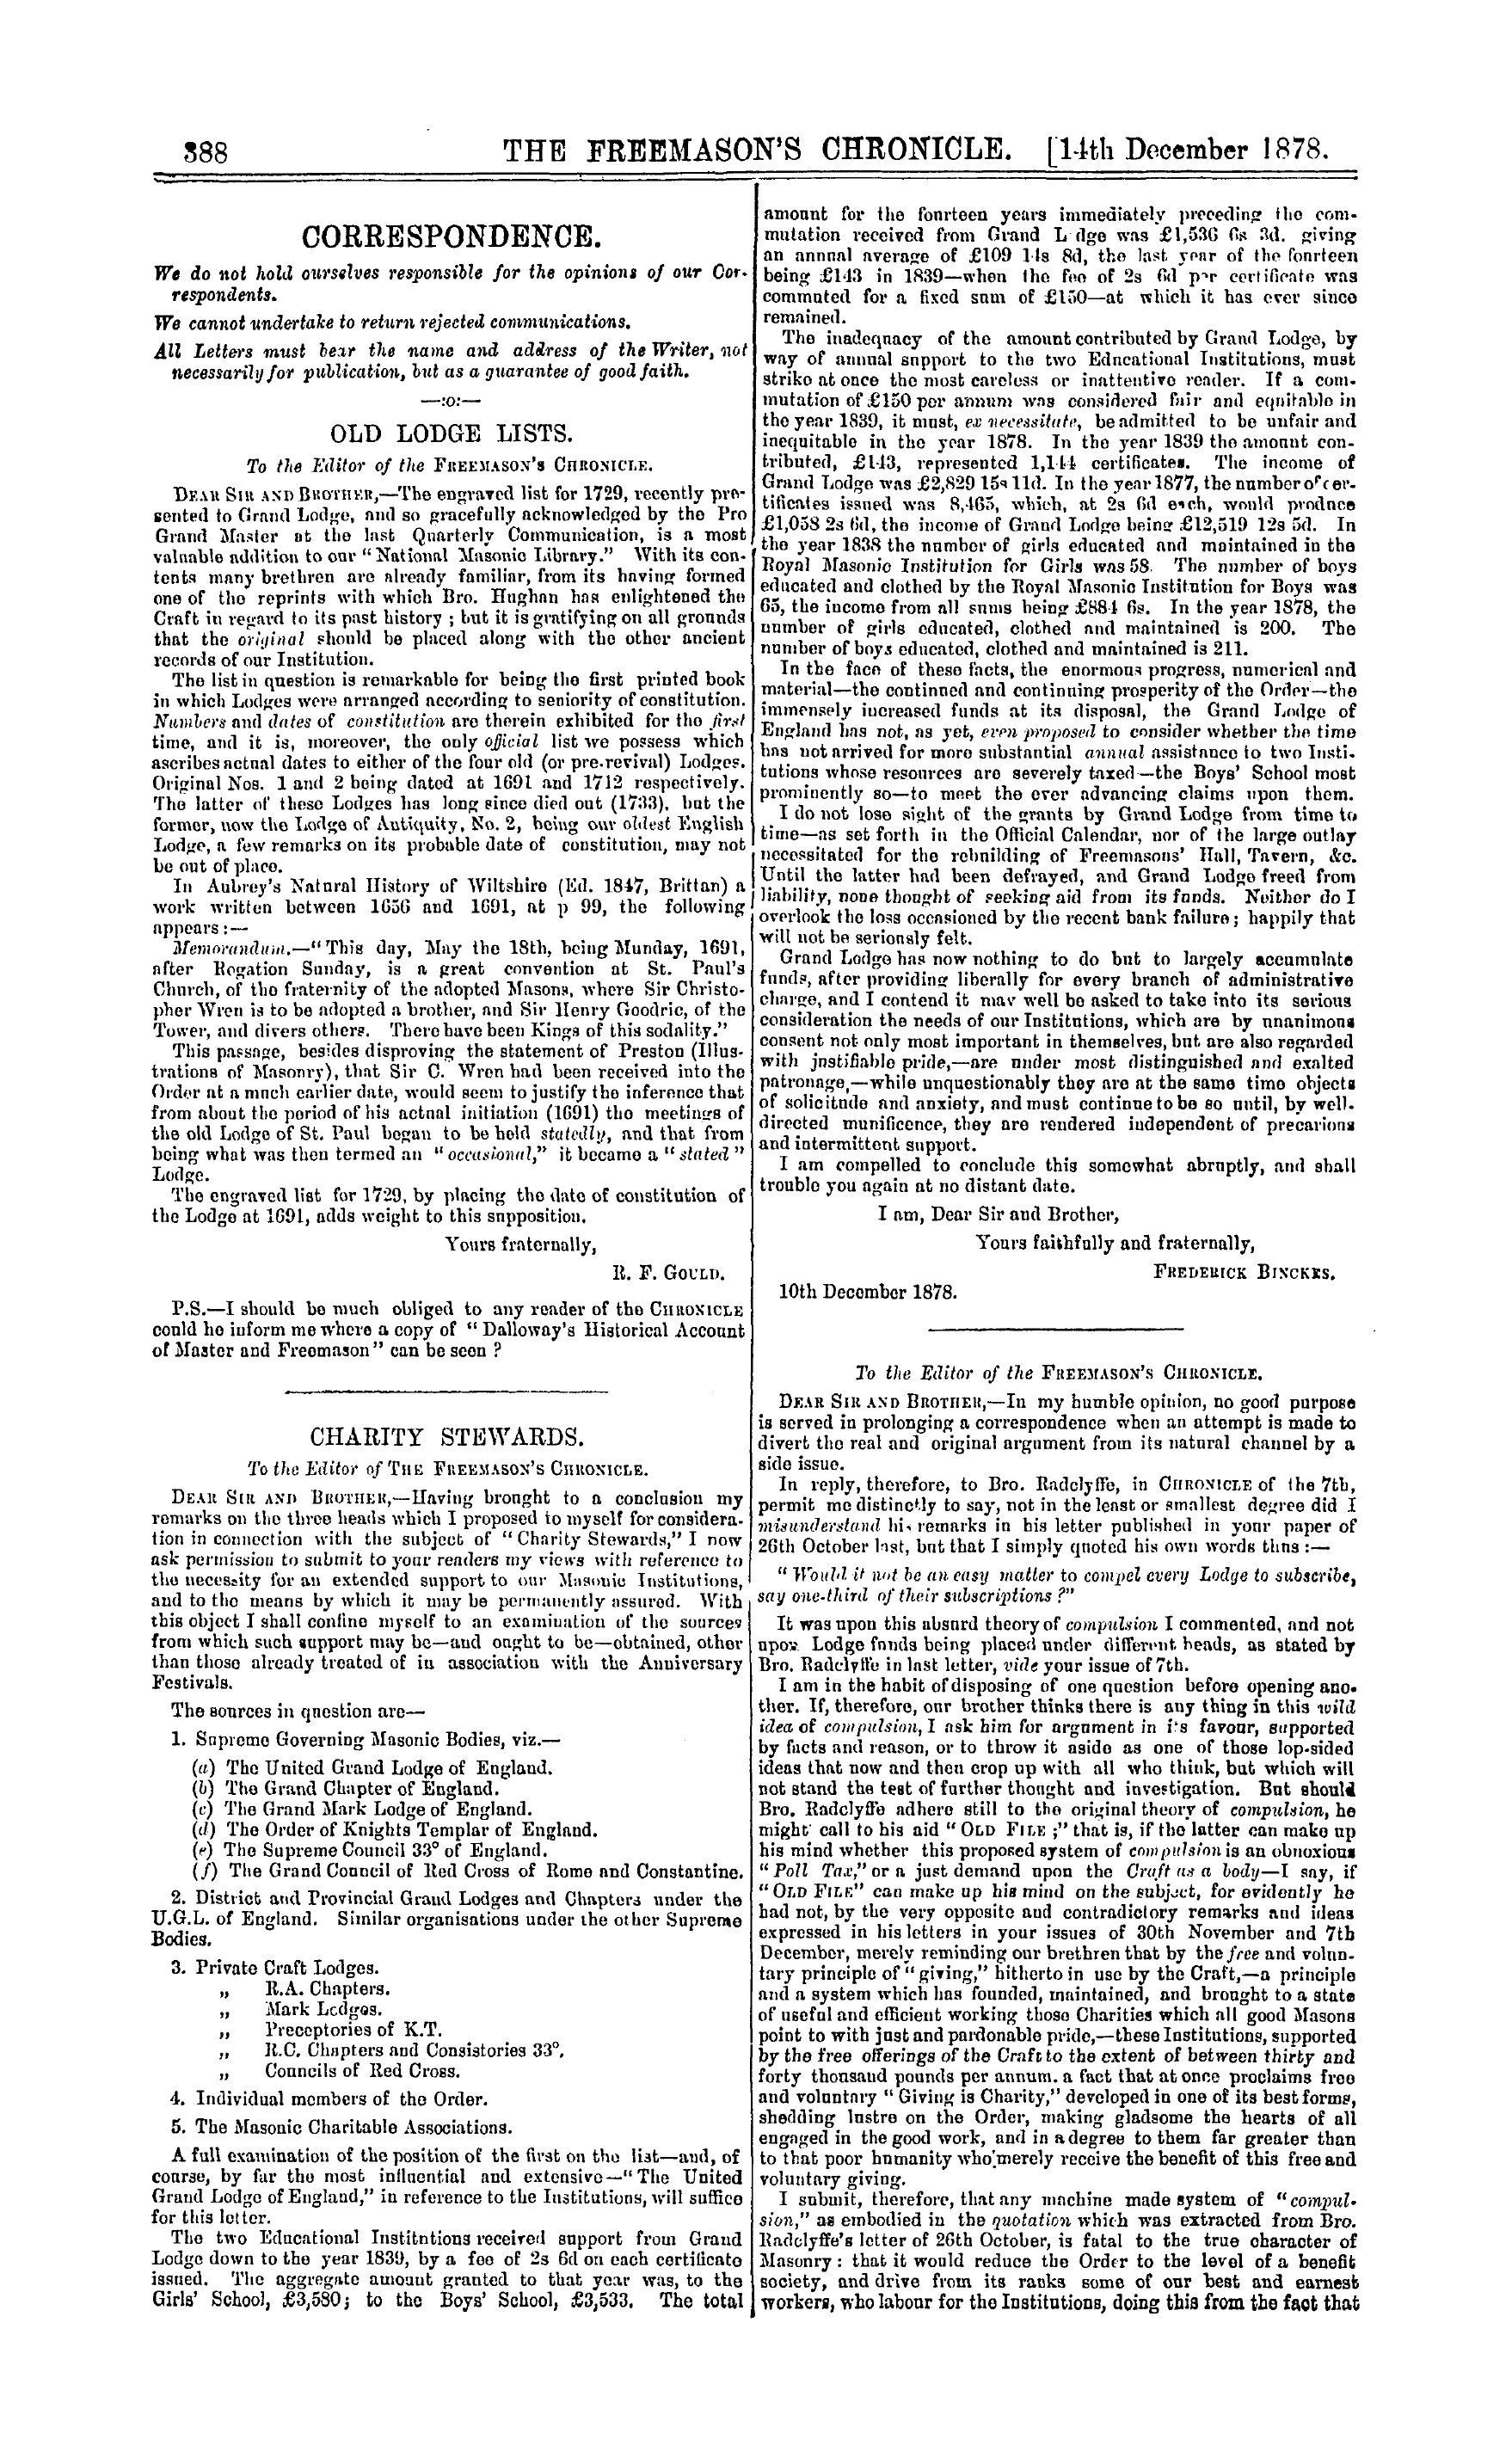 The Freemason's Chronicle: 1878-12-14: 4